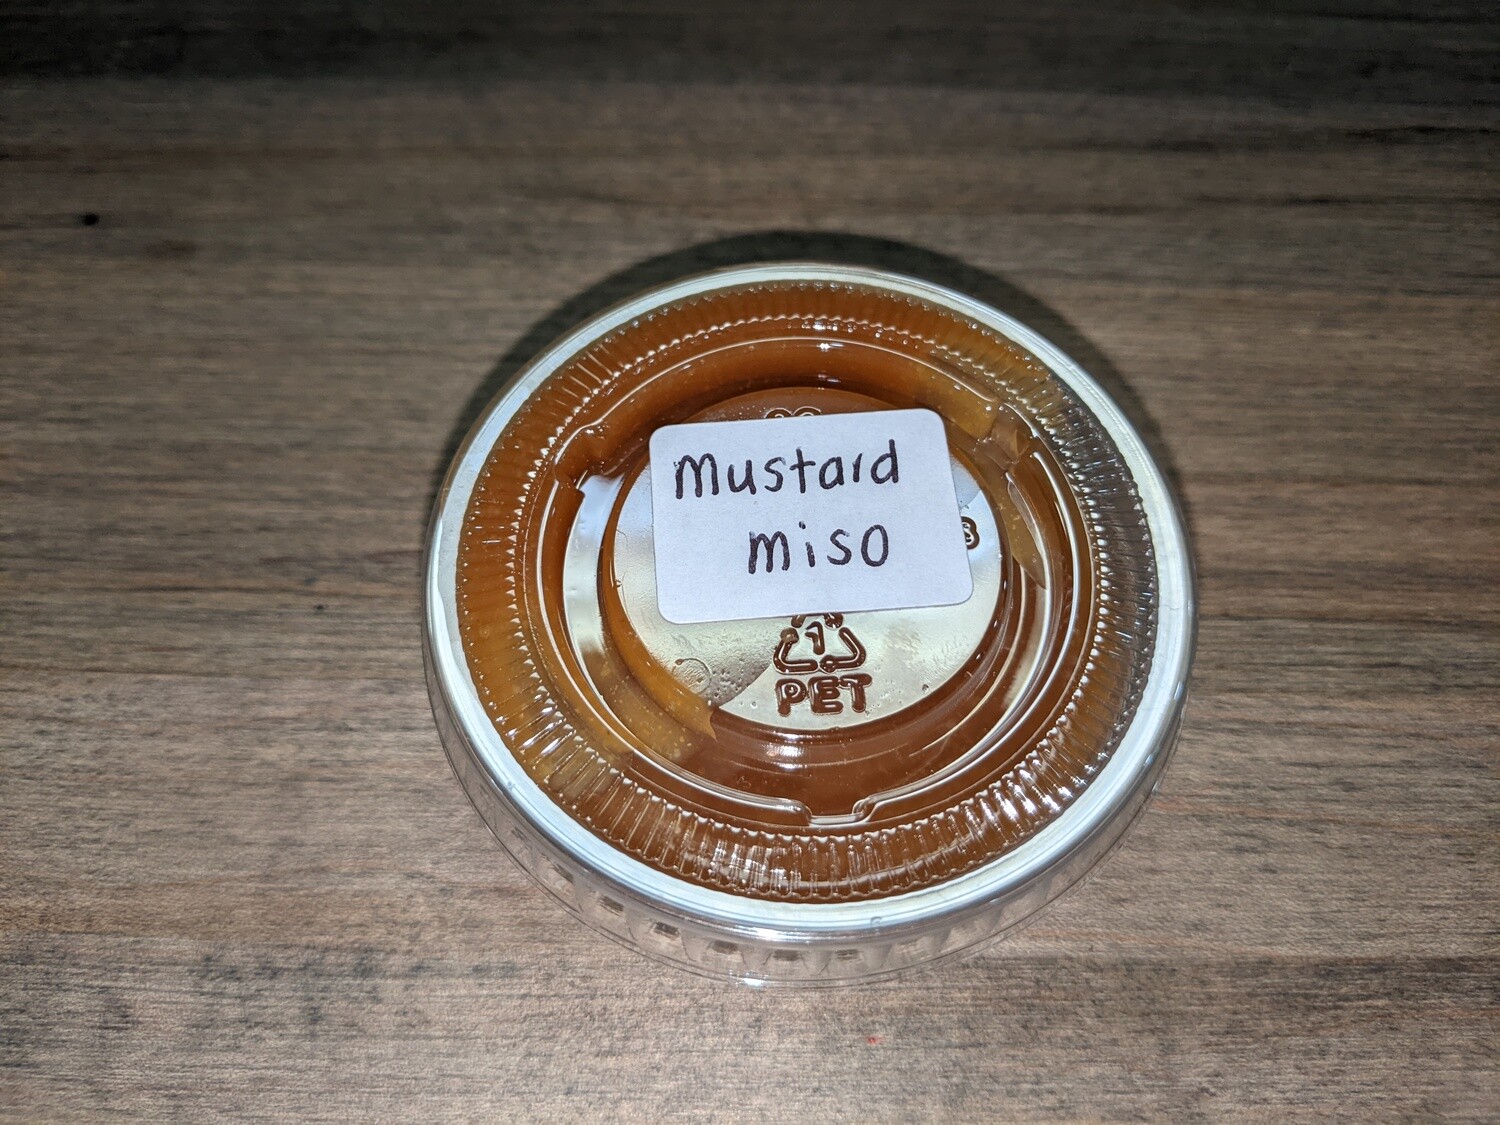 Mustard miso